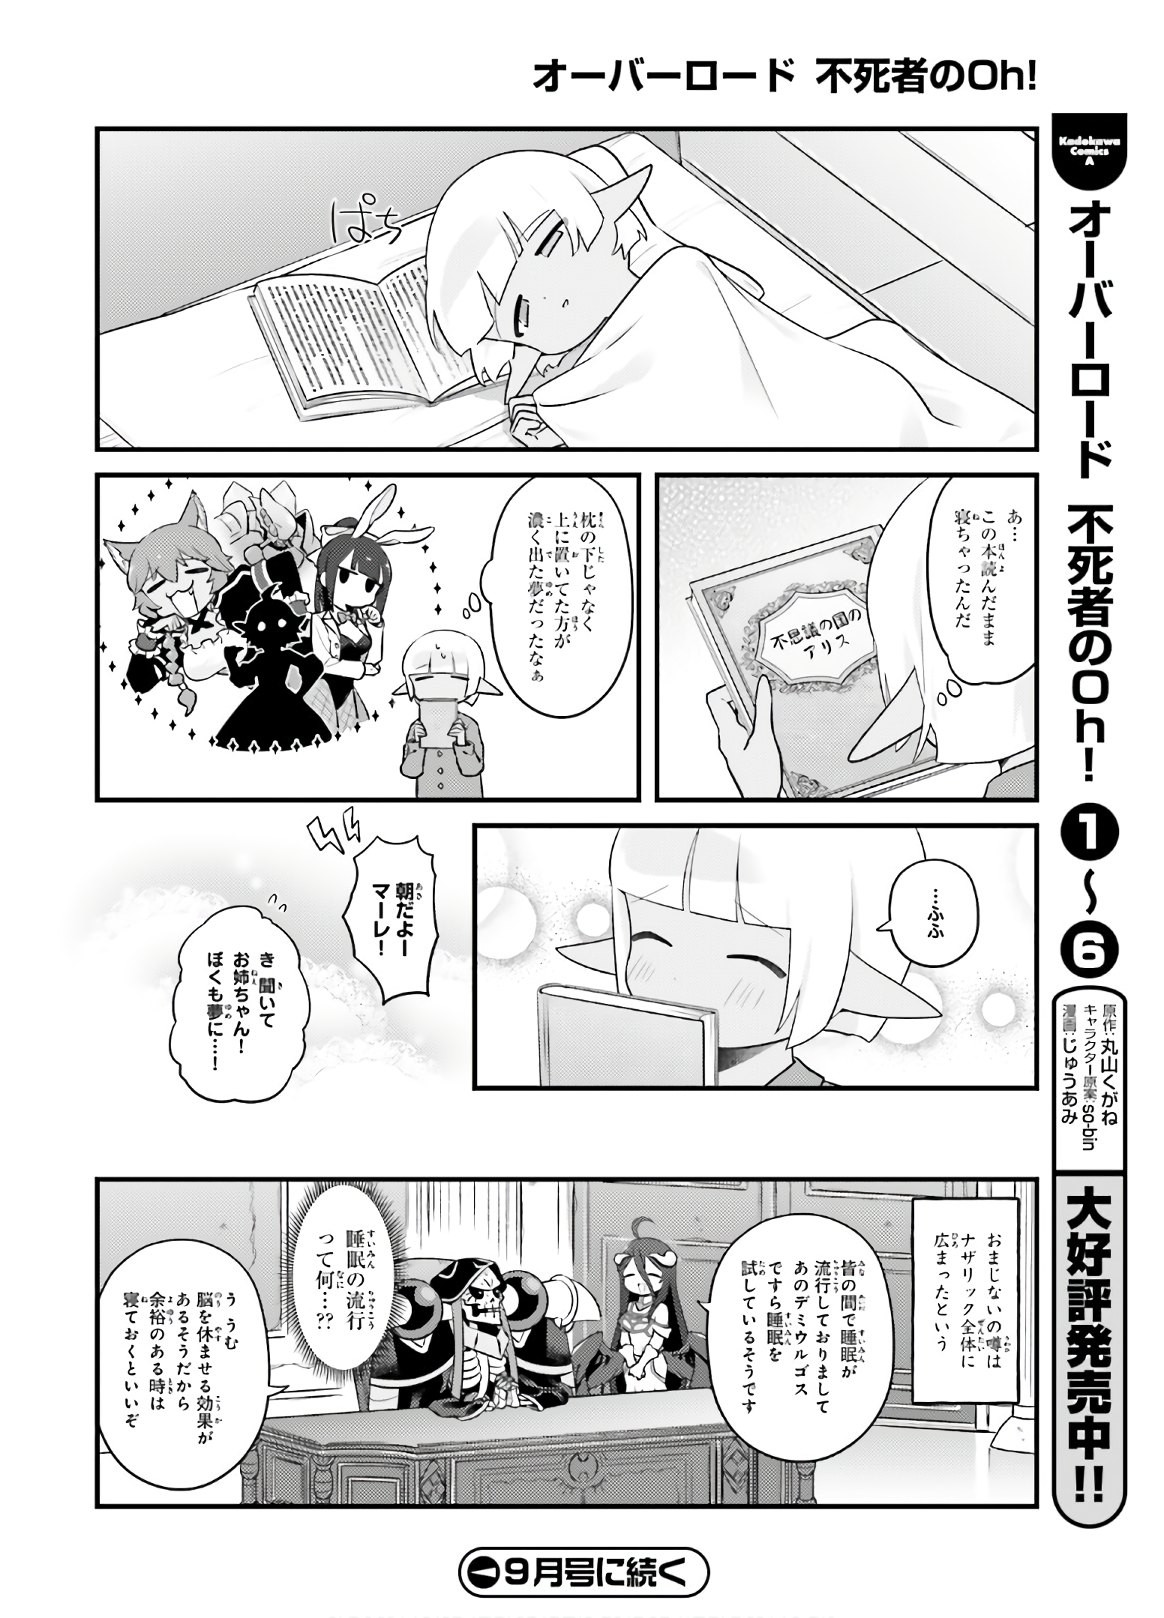 Overlord-Fushisha-no-Oh - Chapter 39 - Page 20